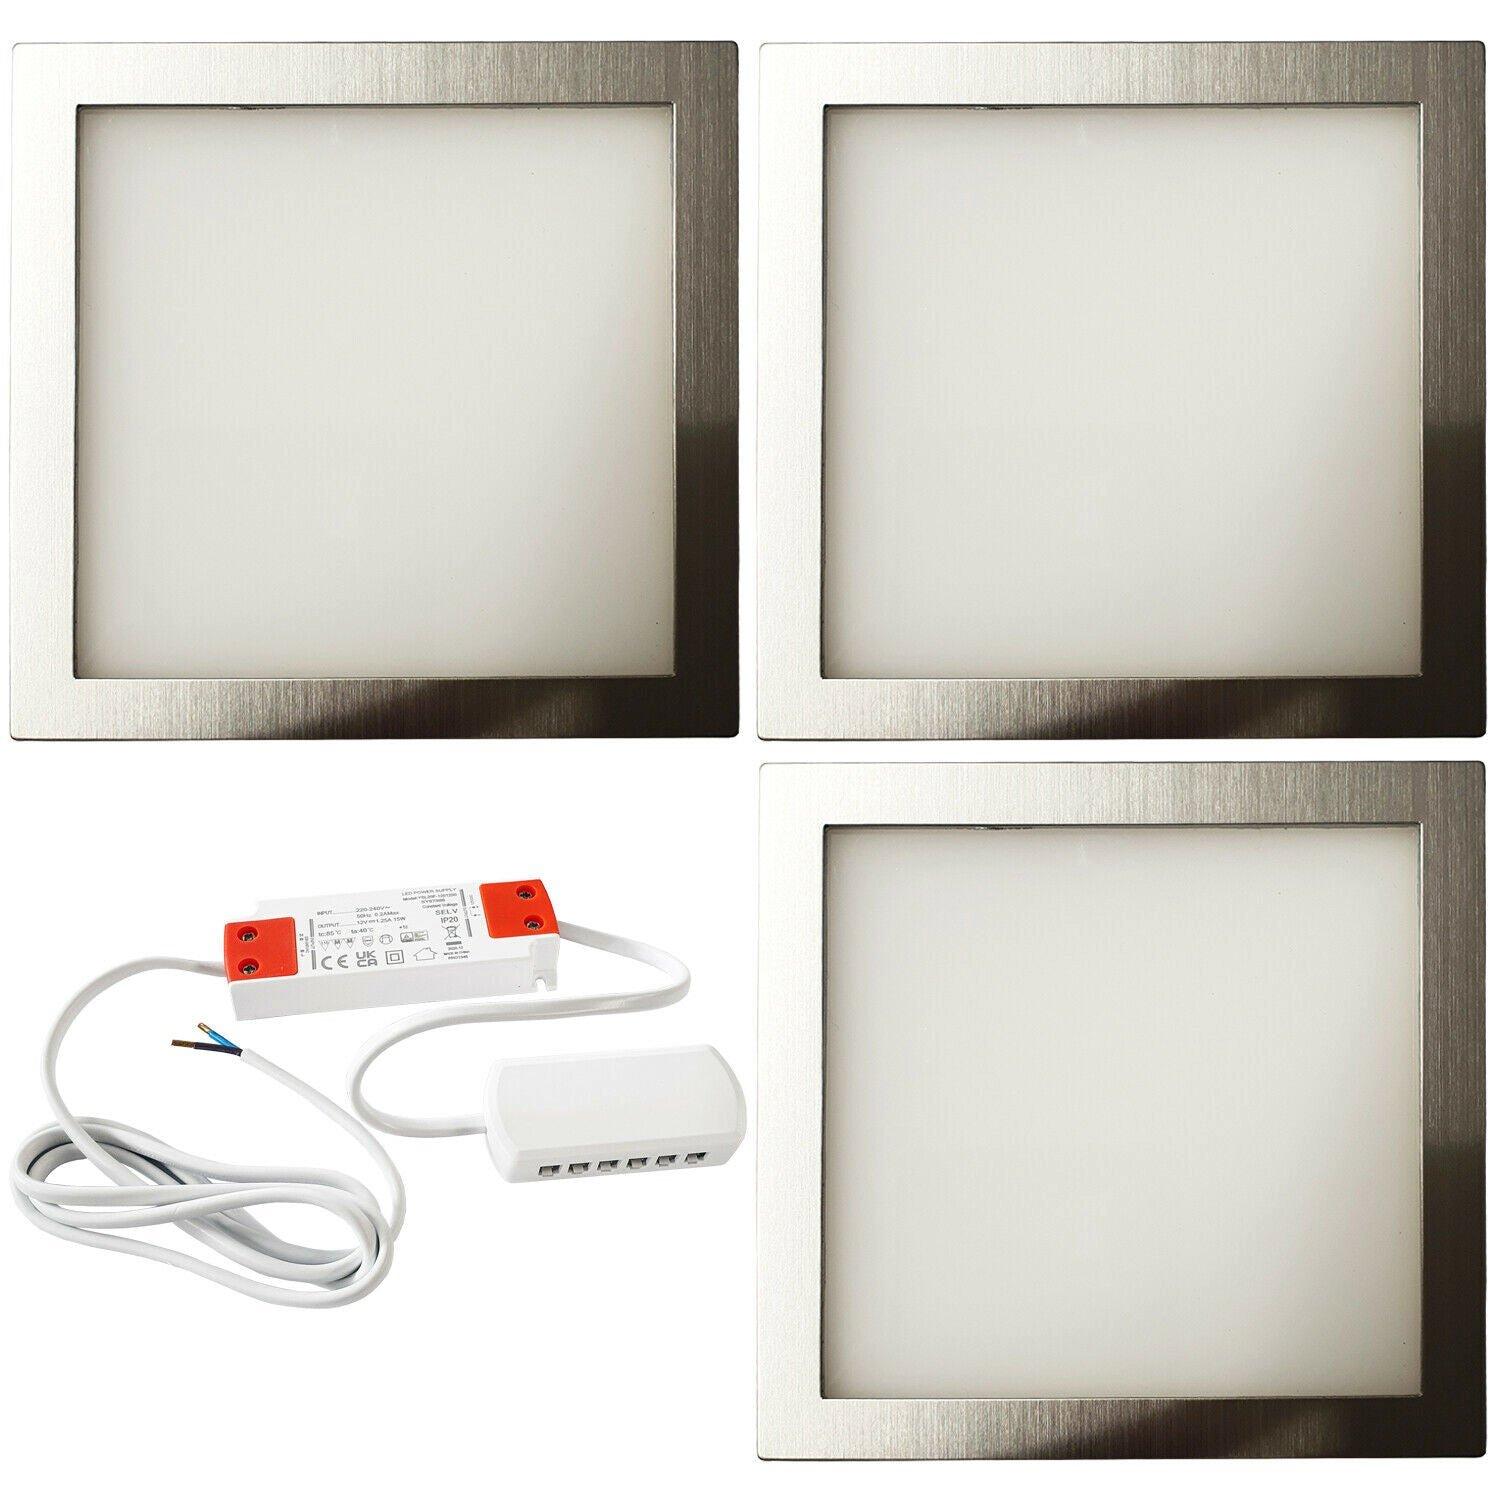 3x BRUSHED NICKEL Ultra-Slim Square Under Cabinet Kitchen Light & Driver Kit - Natural White LED